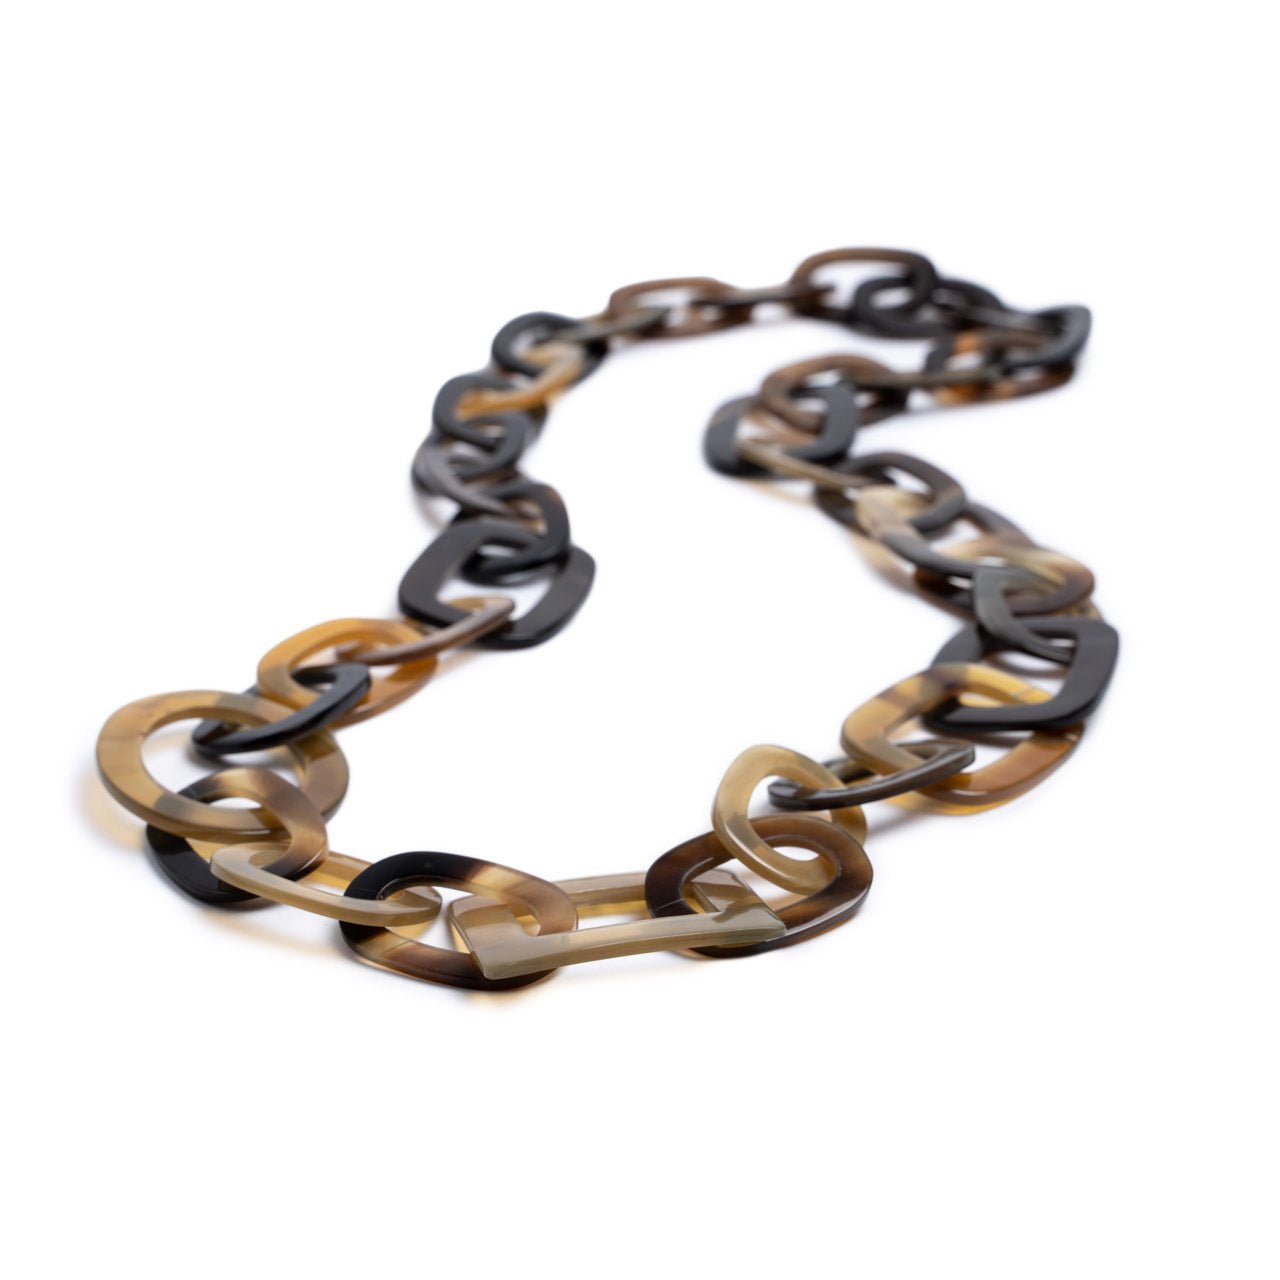 Earth tone chainlink necklace - Sundara Joon